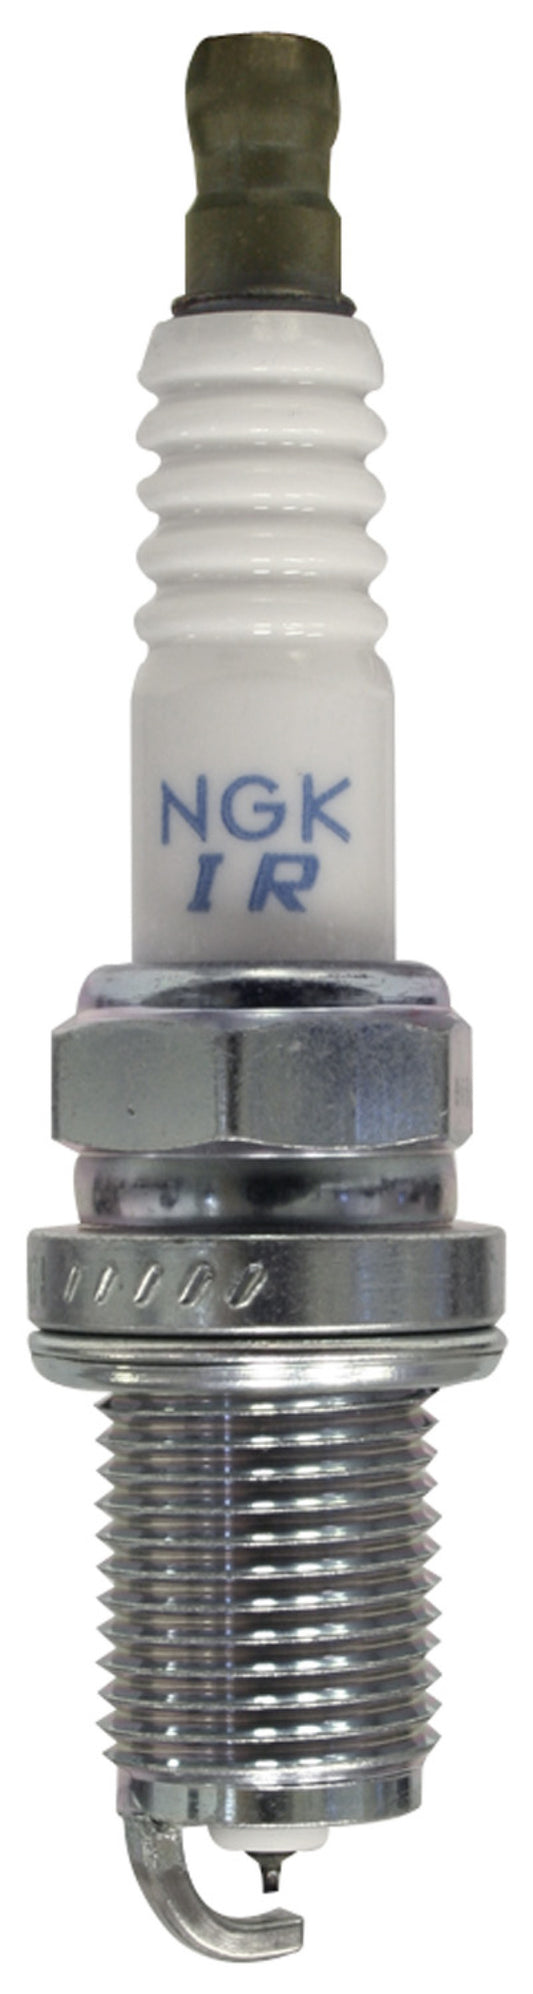 NGK Laser Iridium Spark Plug Box of 4 (IFR6B-K)